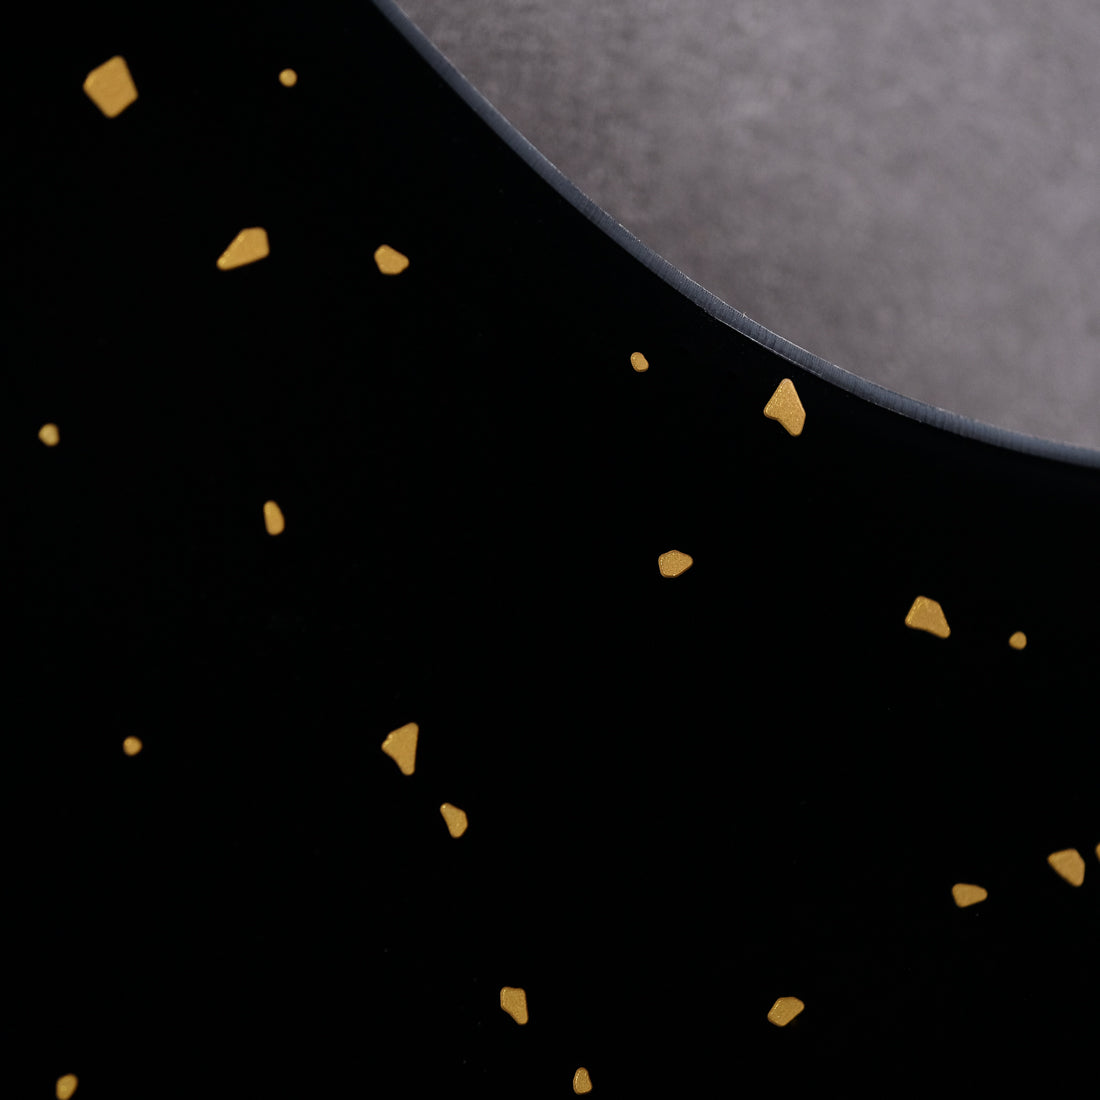 Speckled - Stratocaster Trem Cover - Gold on Black Plexi